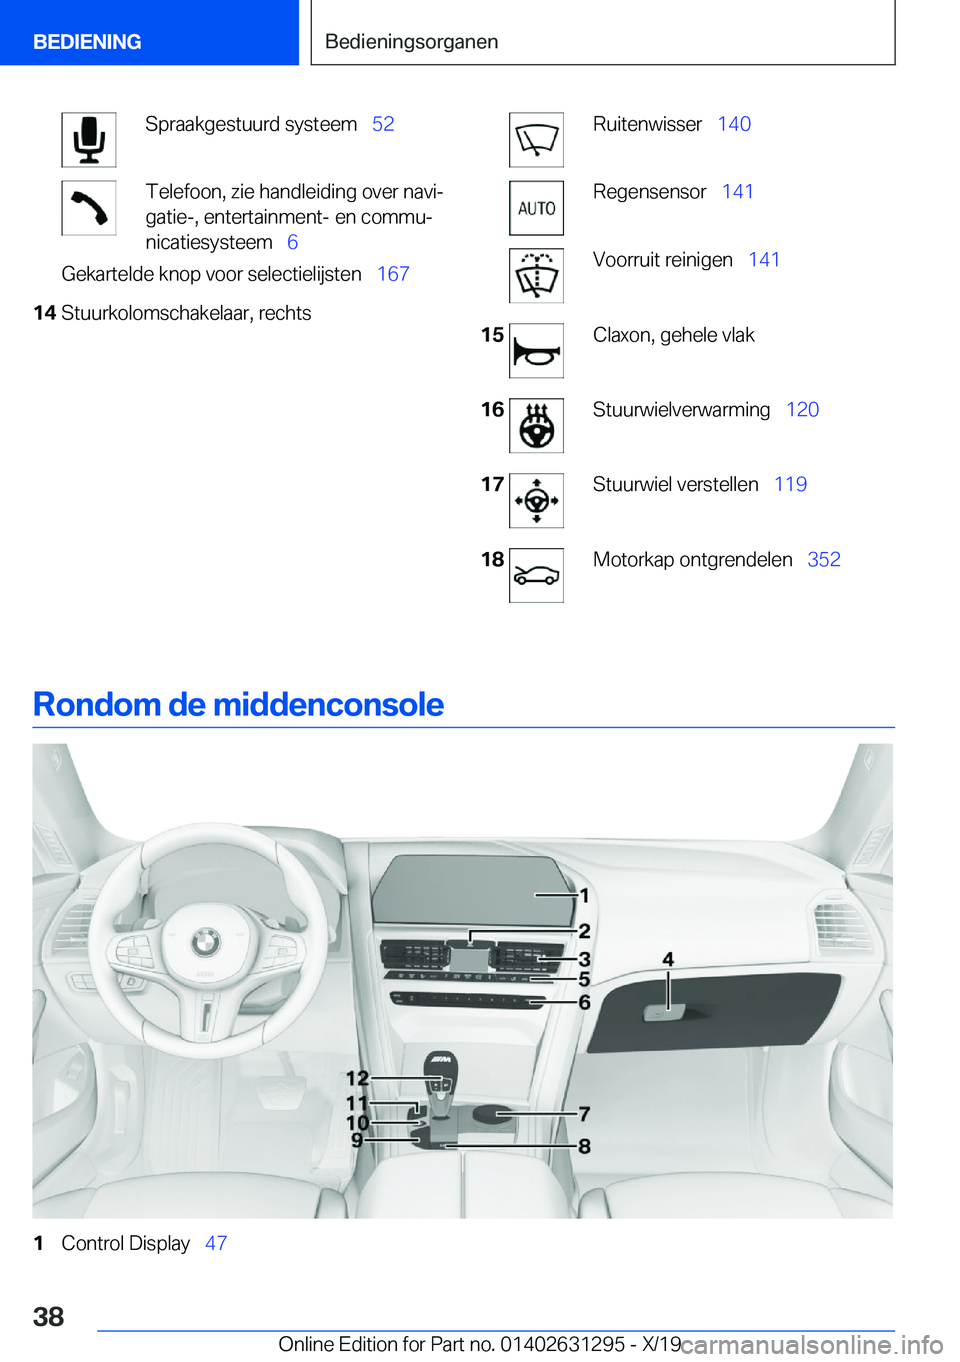 BMW M8 2020  Instructieboekjes (in Dutch) �S�p�r�a�a�k�g�e�s�t�u�u�r�d��s�y�s�t�e�e�m\_�5�2�T�e�l�e�f�o�o�n�,��z�i�e��h�a�n�d�l�e�i�d�i�n�g��o�v�e�r��n�a�v�ij
�g�a�t�i�e�-�,��e�n�t�e�r�t�a�i�n�m�e�n�t�-��e�n��c�o�m�m�uj
�n�i�c�a�t